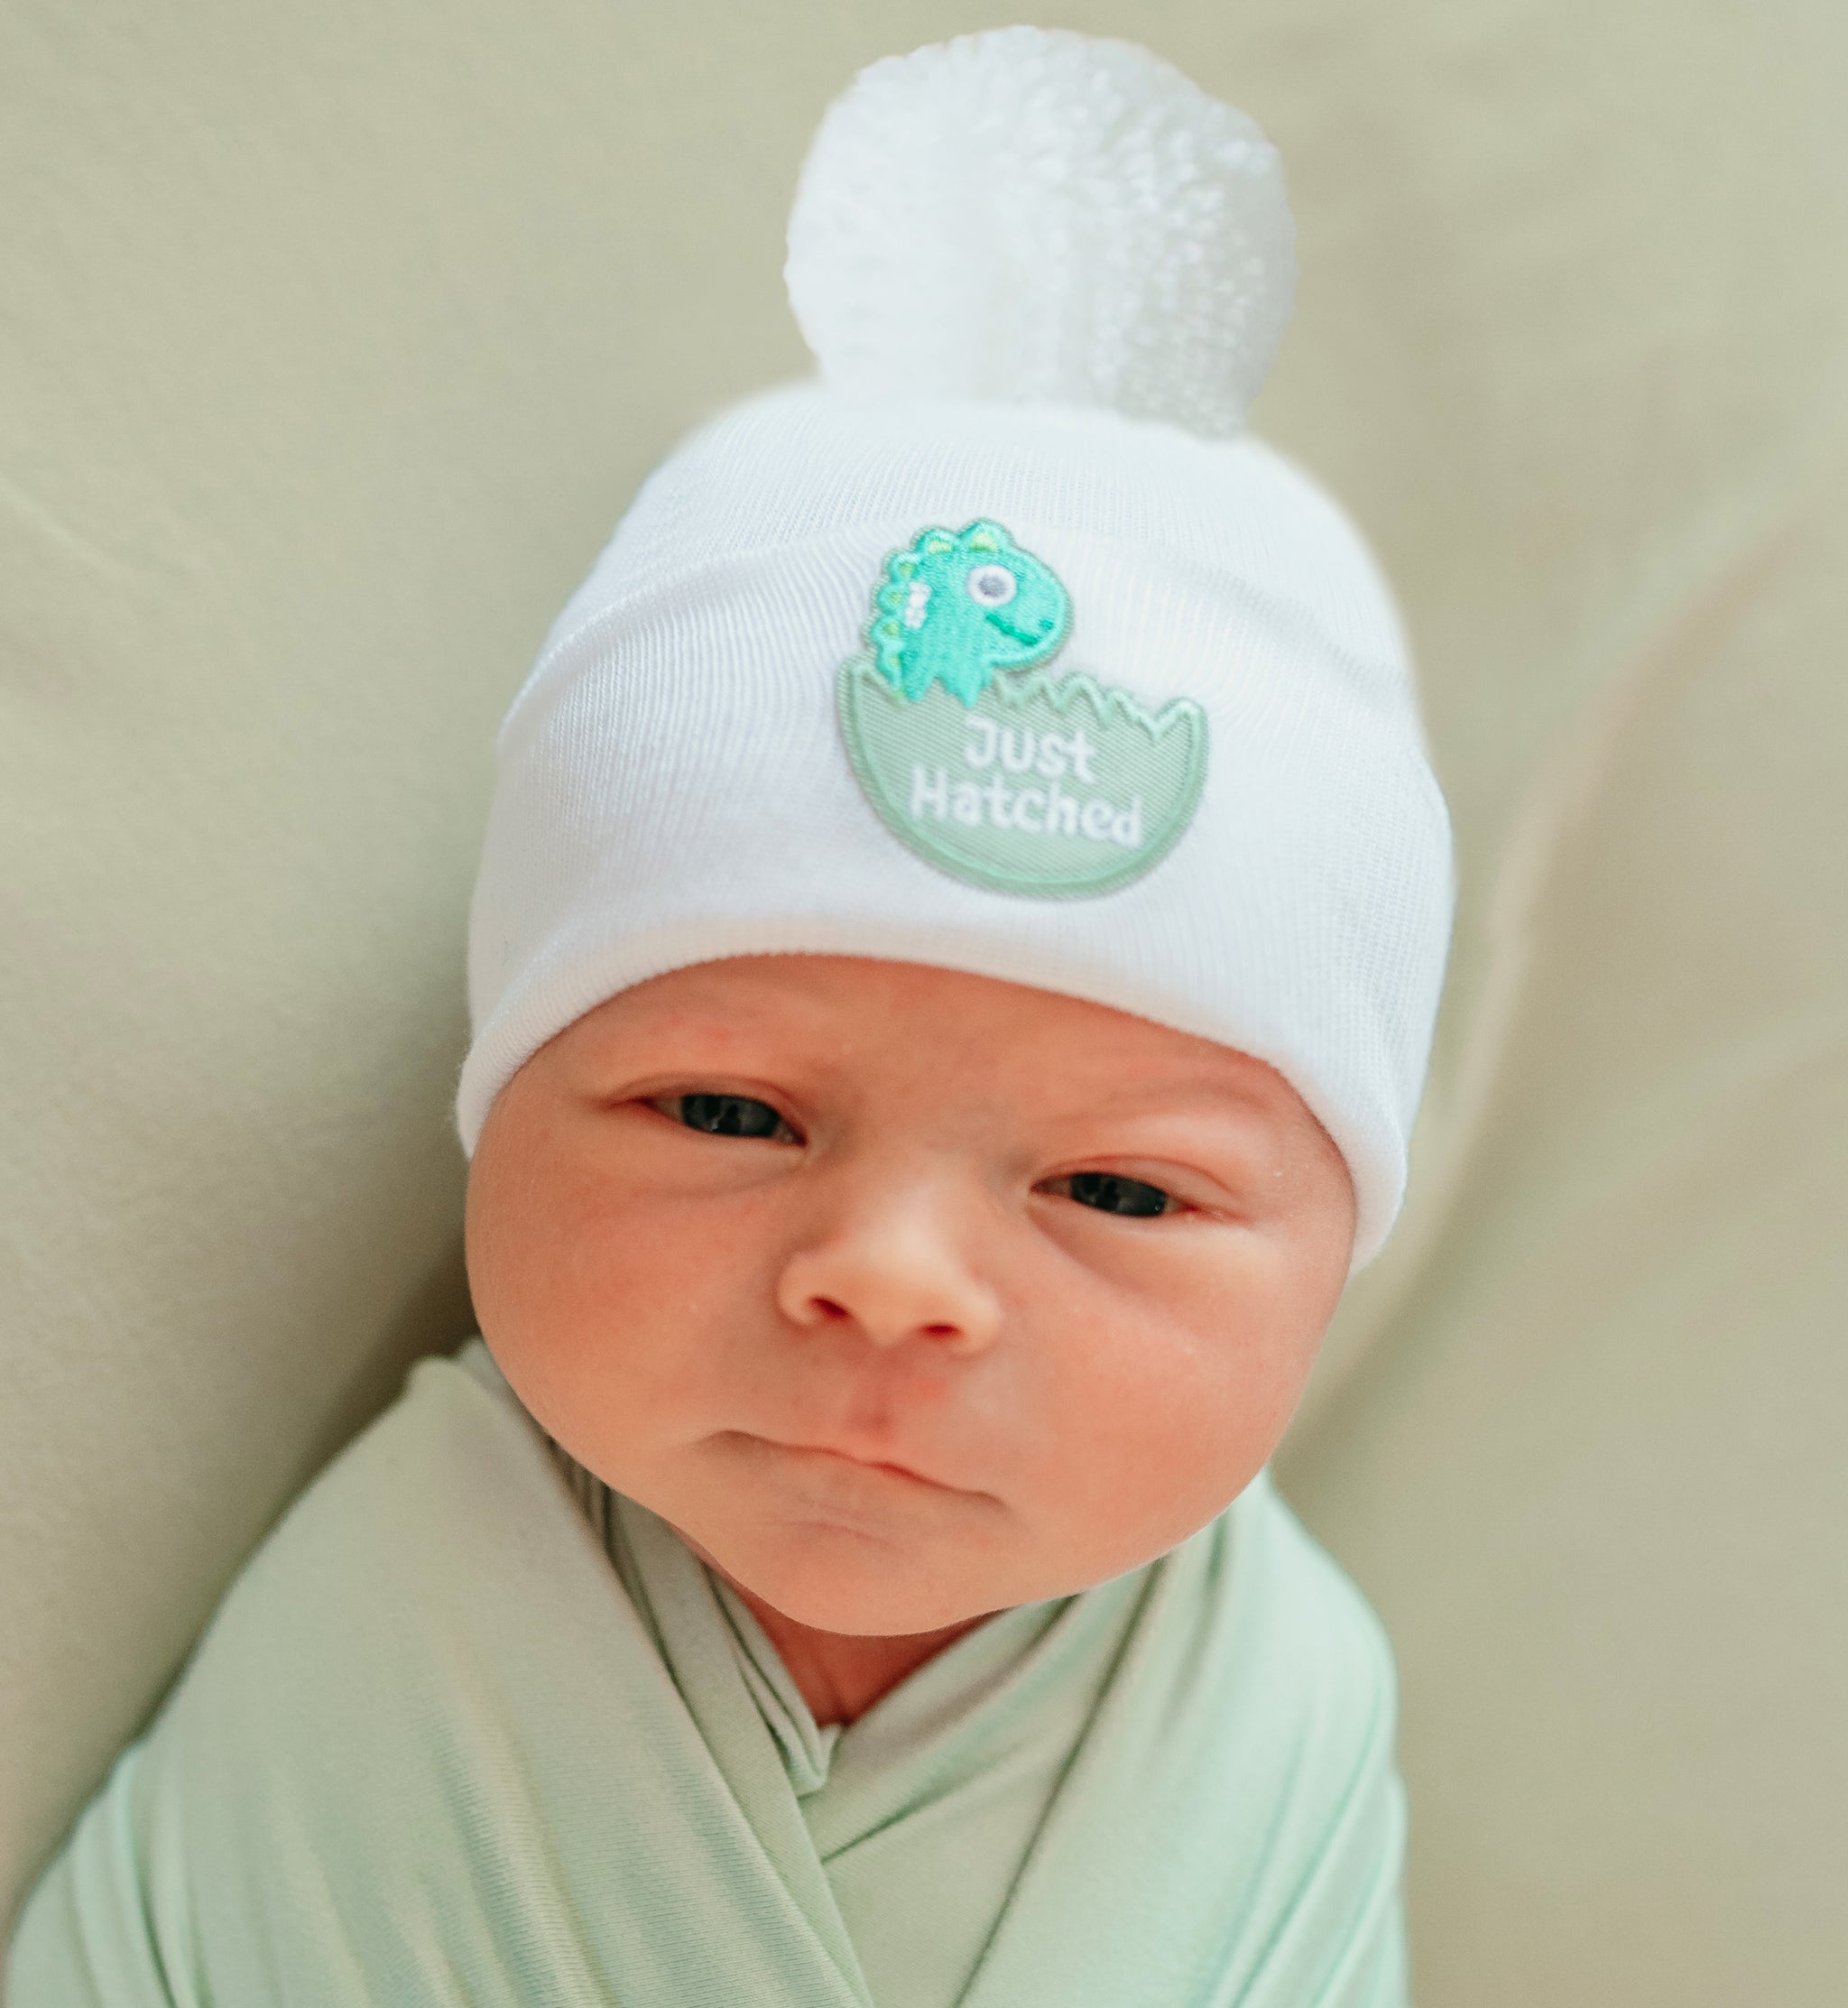 ilybean JUST HATCHED White Newborn Hospital Hat with White Pom